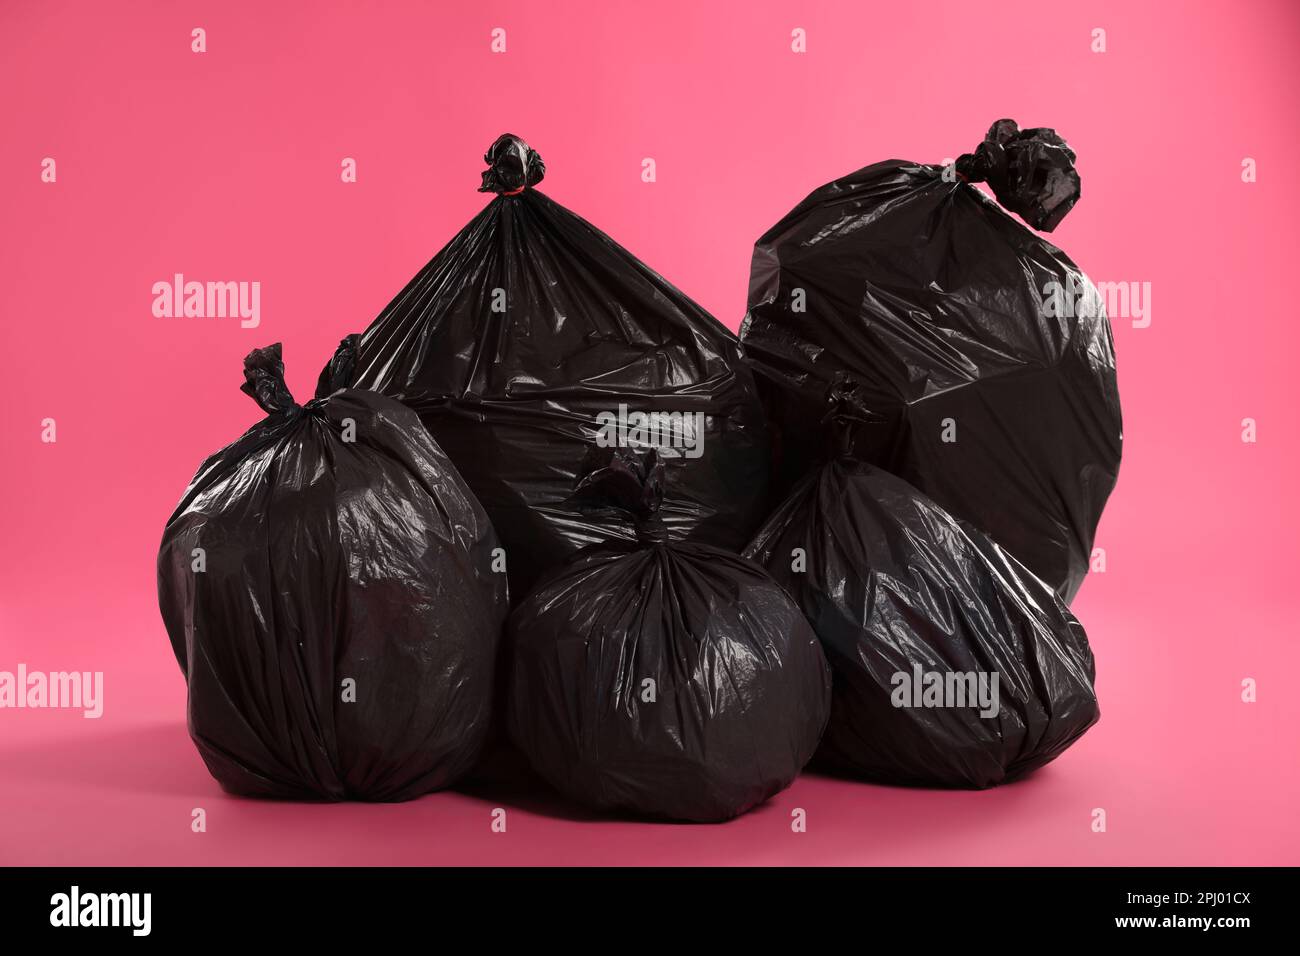 https://c8.alamy.com/comp/2PJ01CX/trash-bags-full-of-garbage-on-pink-background-2PJ01CX.jpg